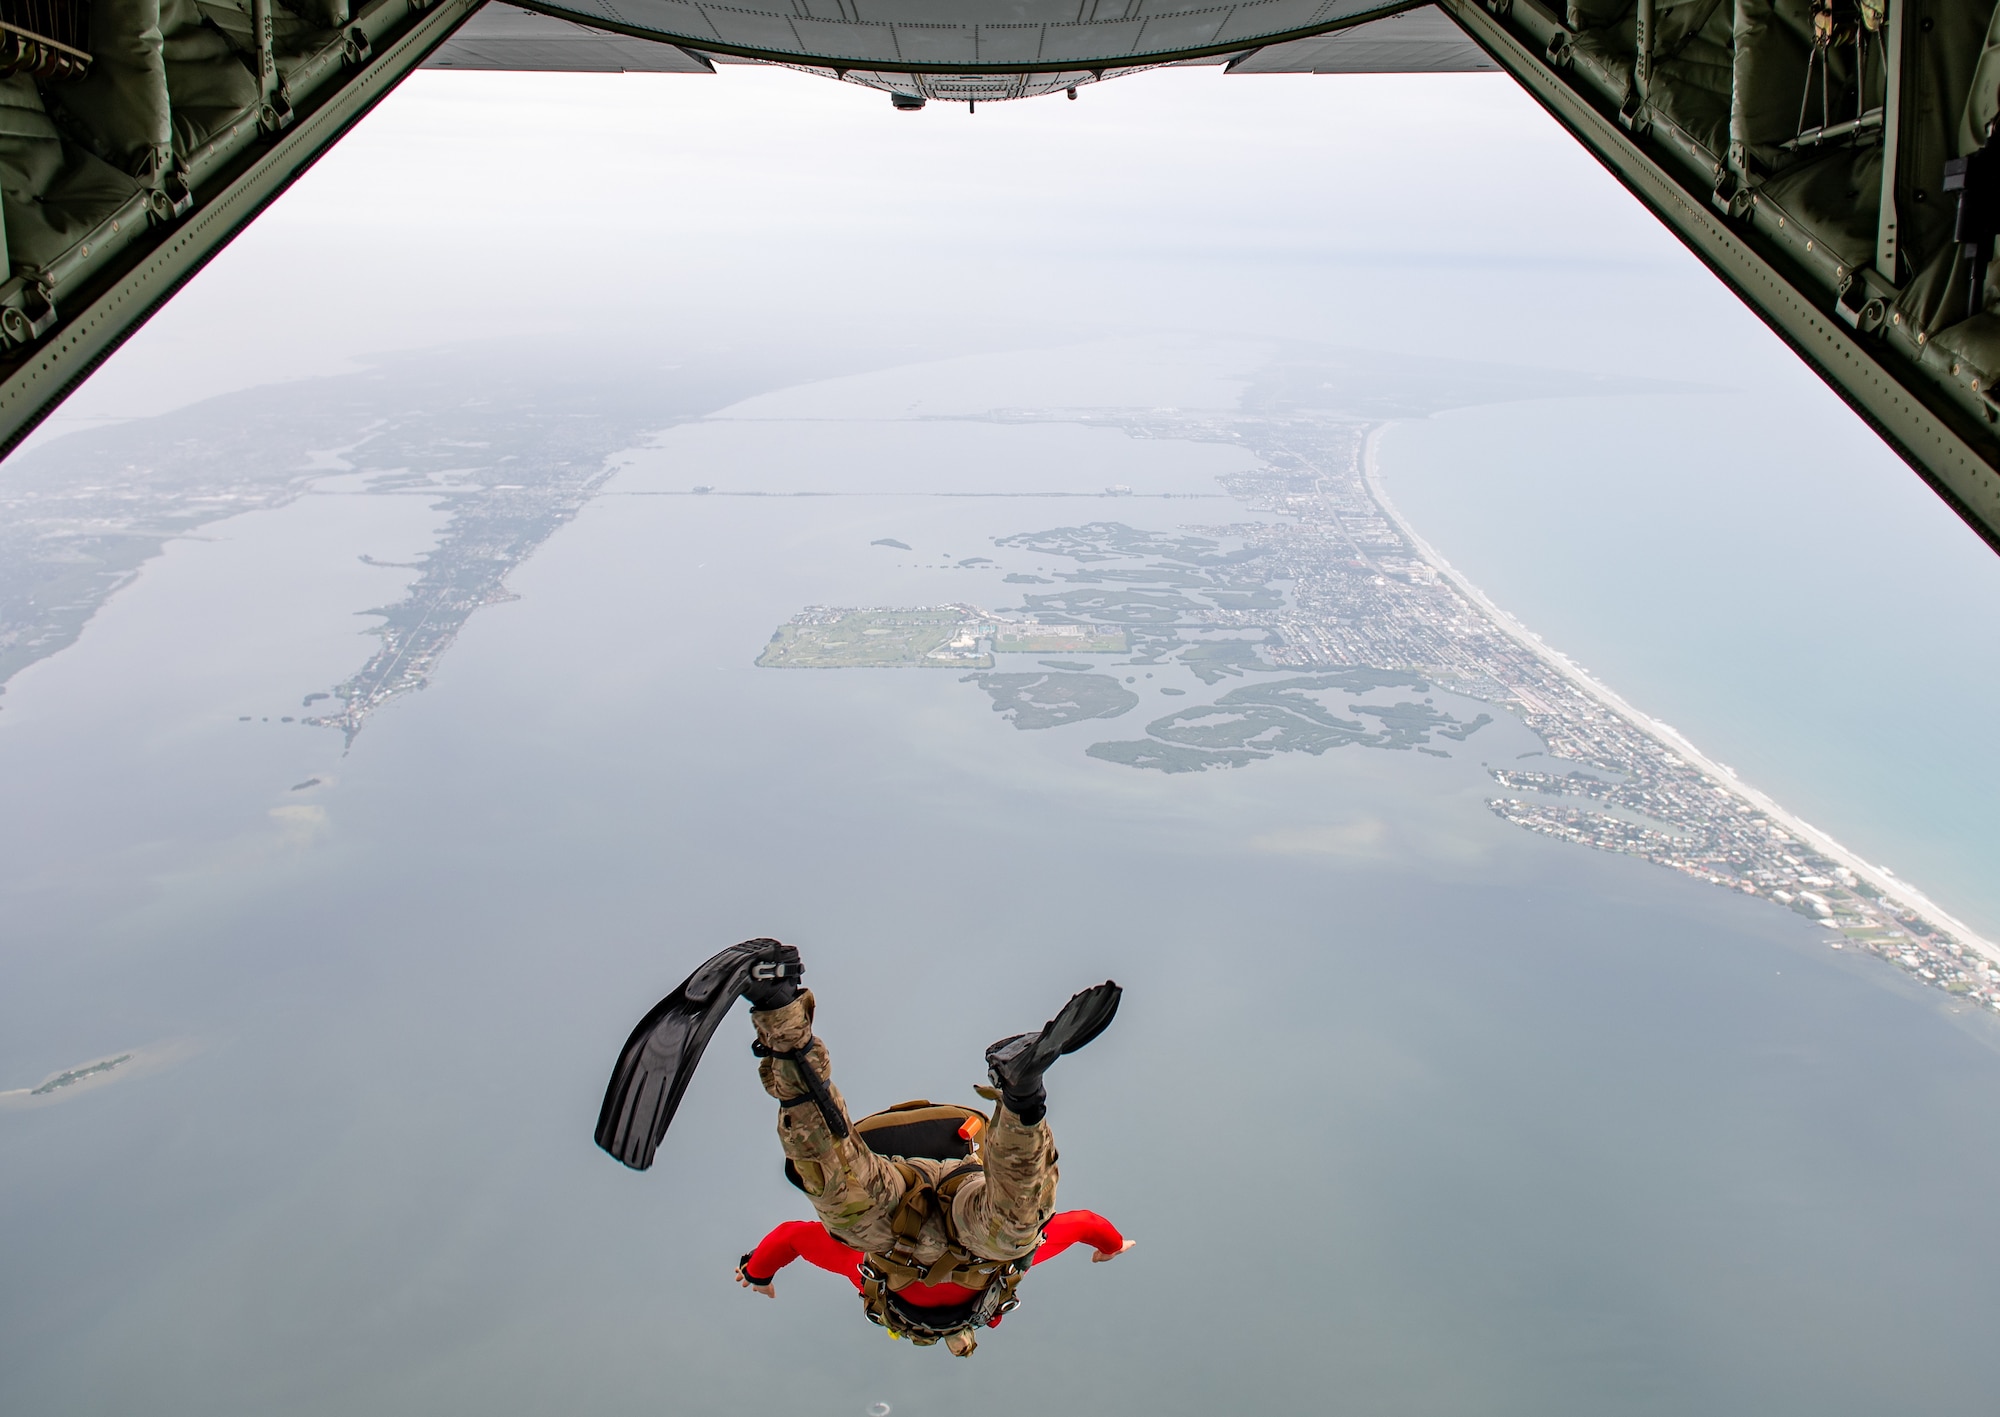 Photo of Airman jumping off an aircraft